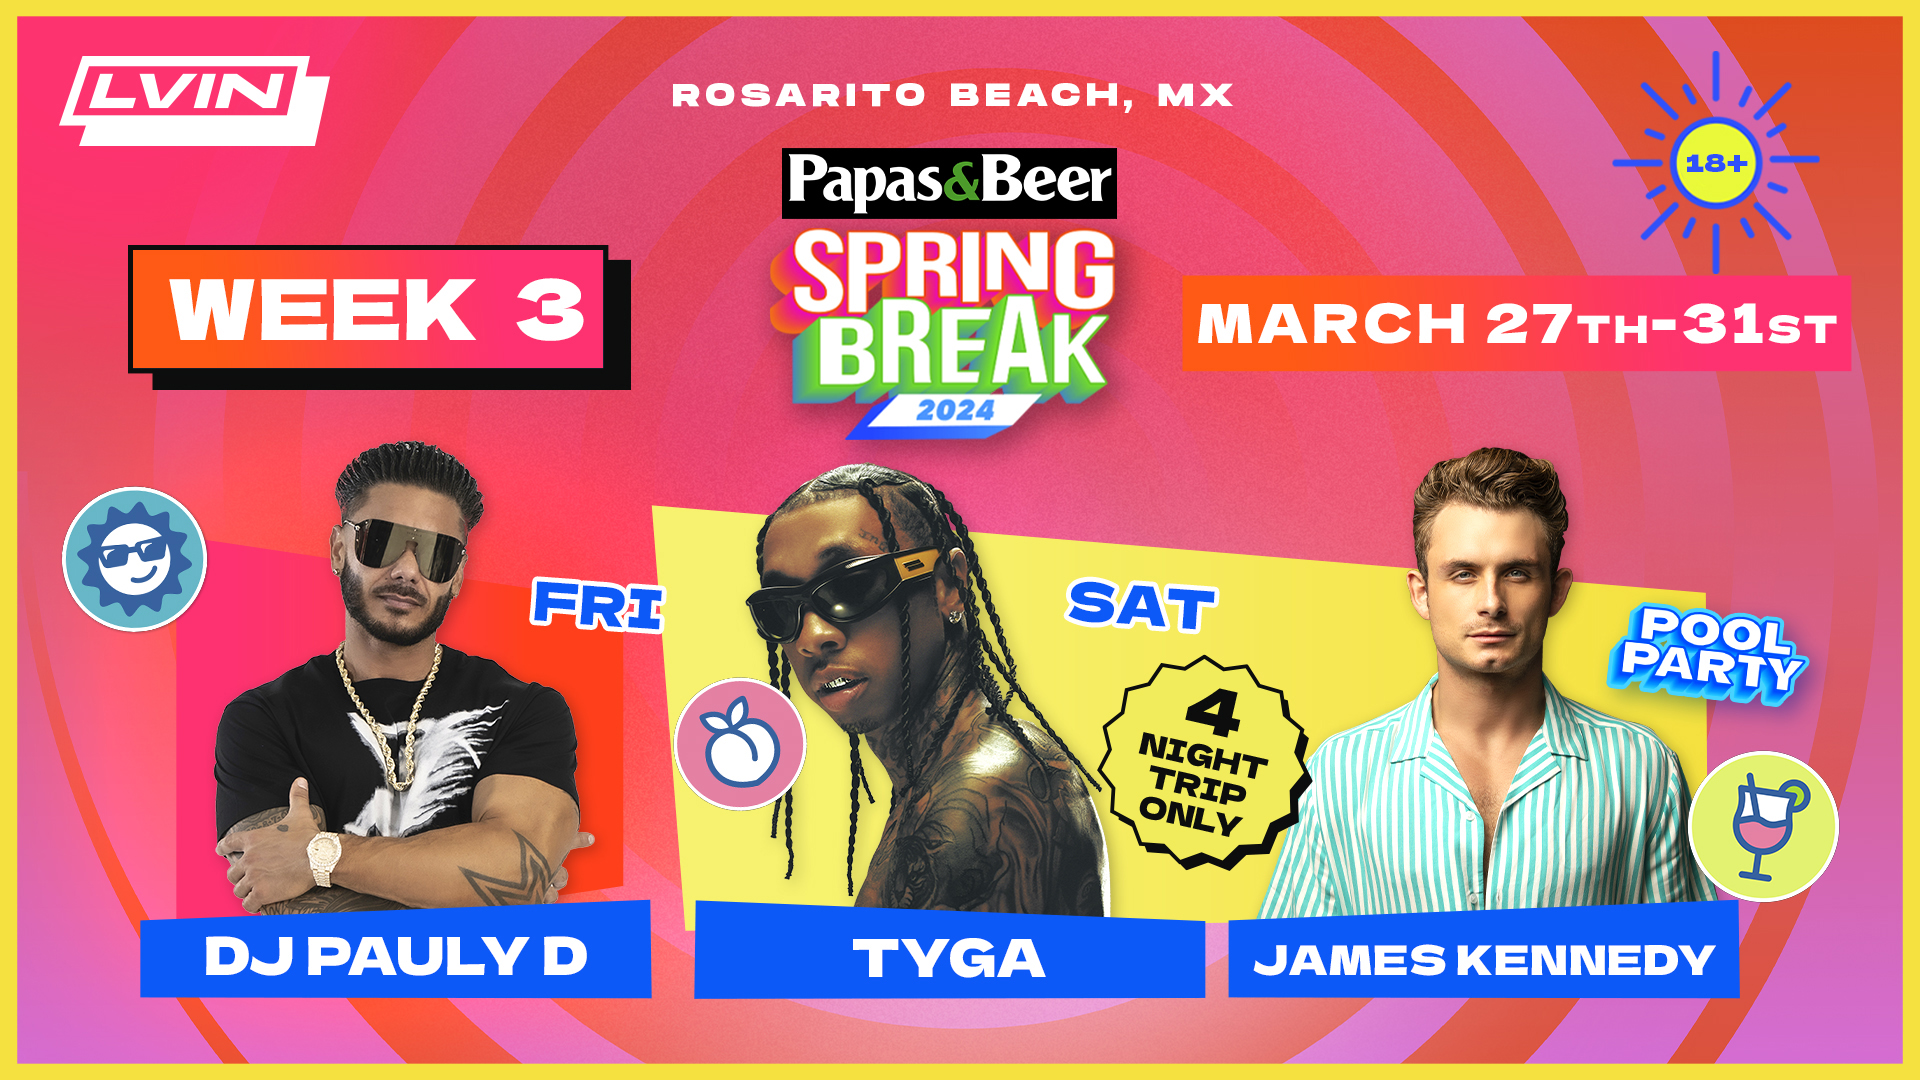 Rosarito Beach Spring Break 2024 Week 3 DJ Artist DJ Pauly D Tyga James Kennedy Papas&Beer Concert LVIN